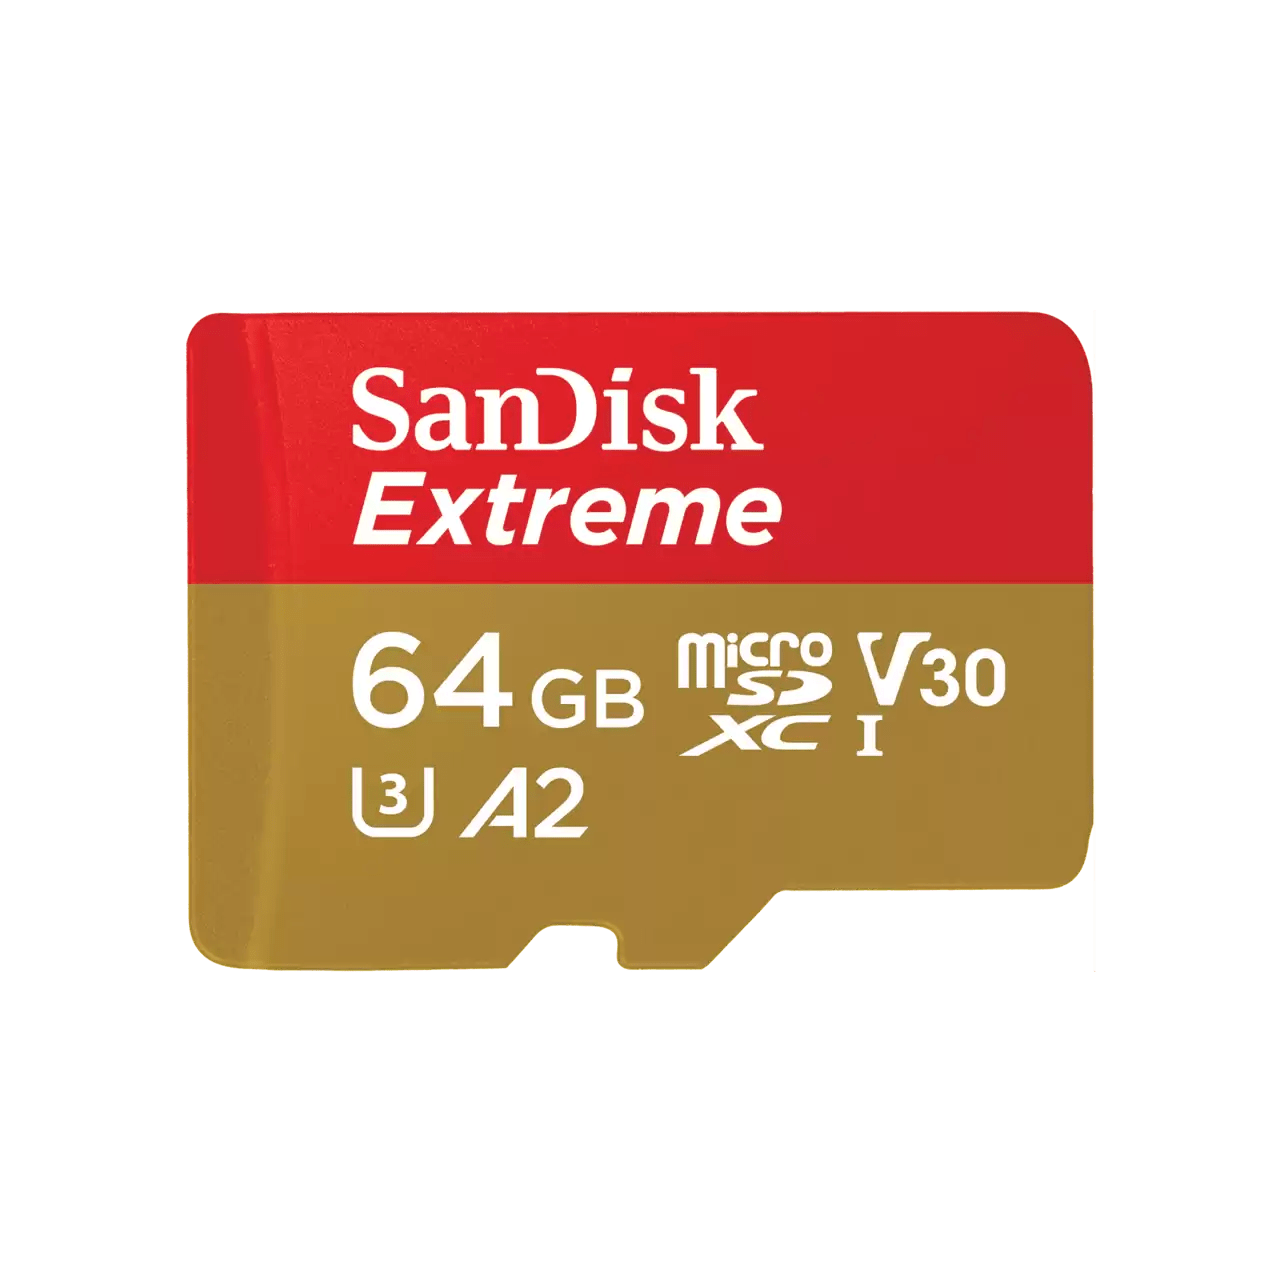 Sandisk Extreme 64GB A2 V30 U3 UHS - I microSDXC 記憶卡 (SDSQXAH - 064G - GN6GN) - Fever Electrics 電器熱網購平台